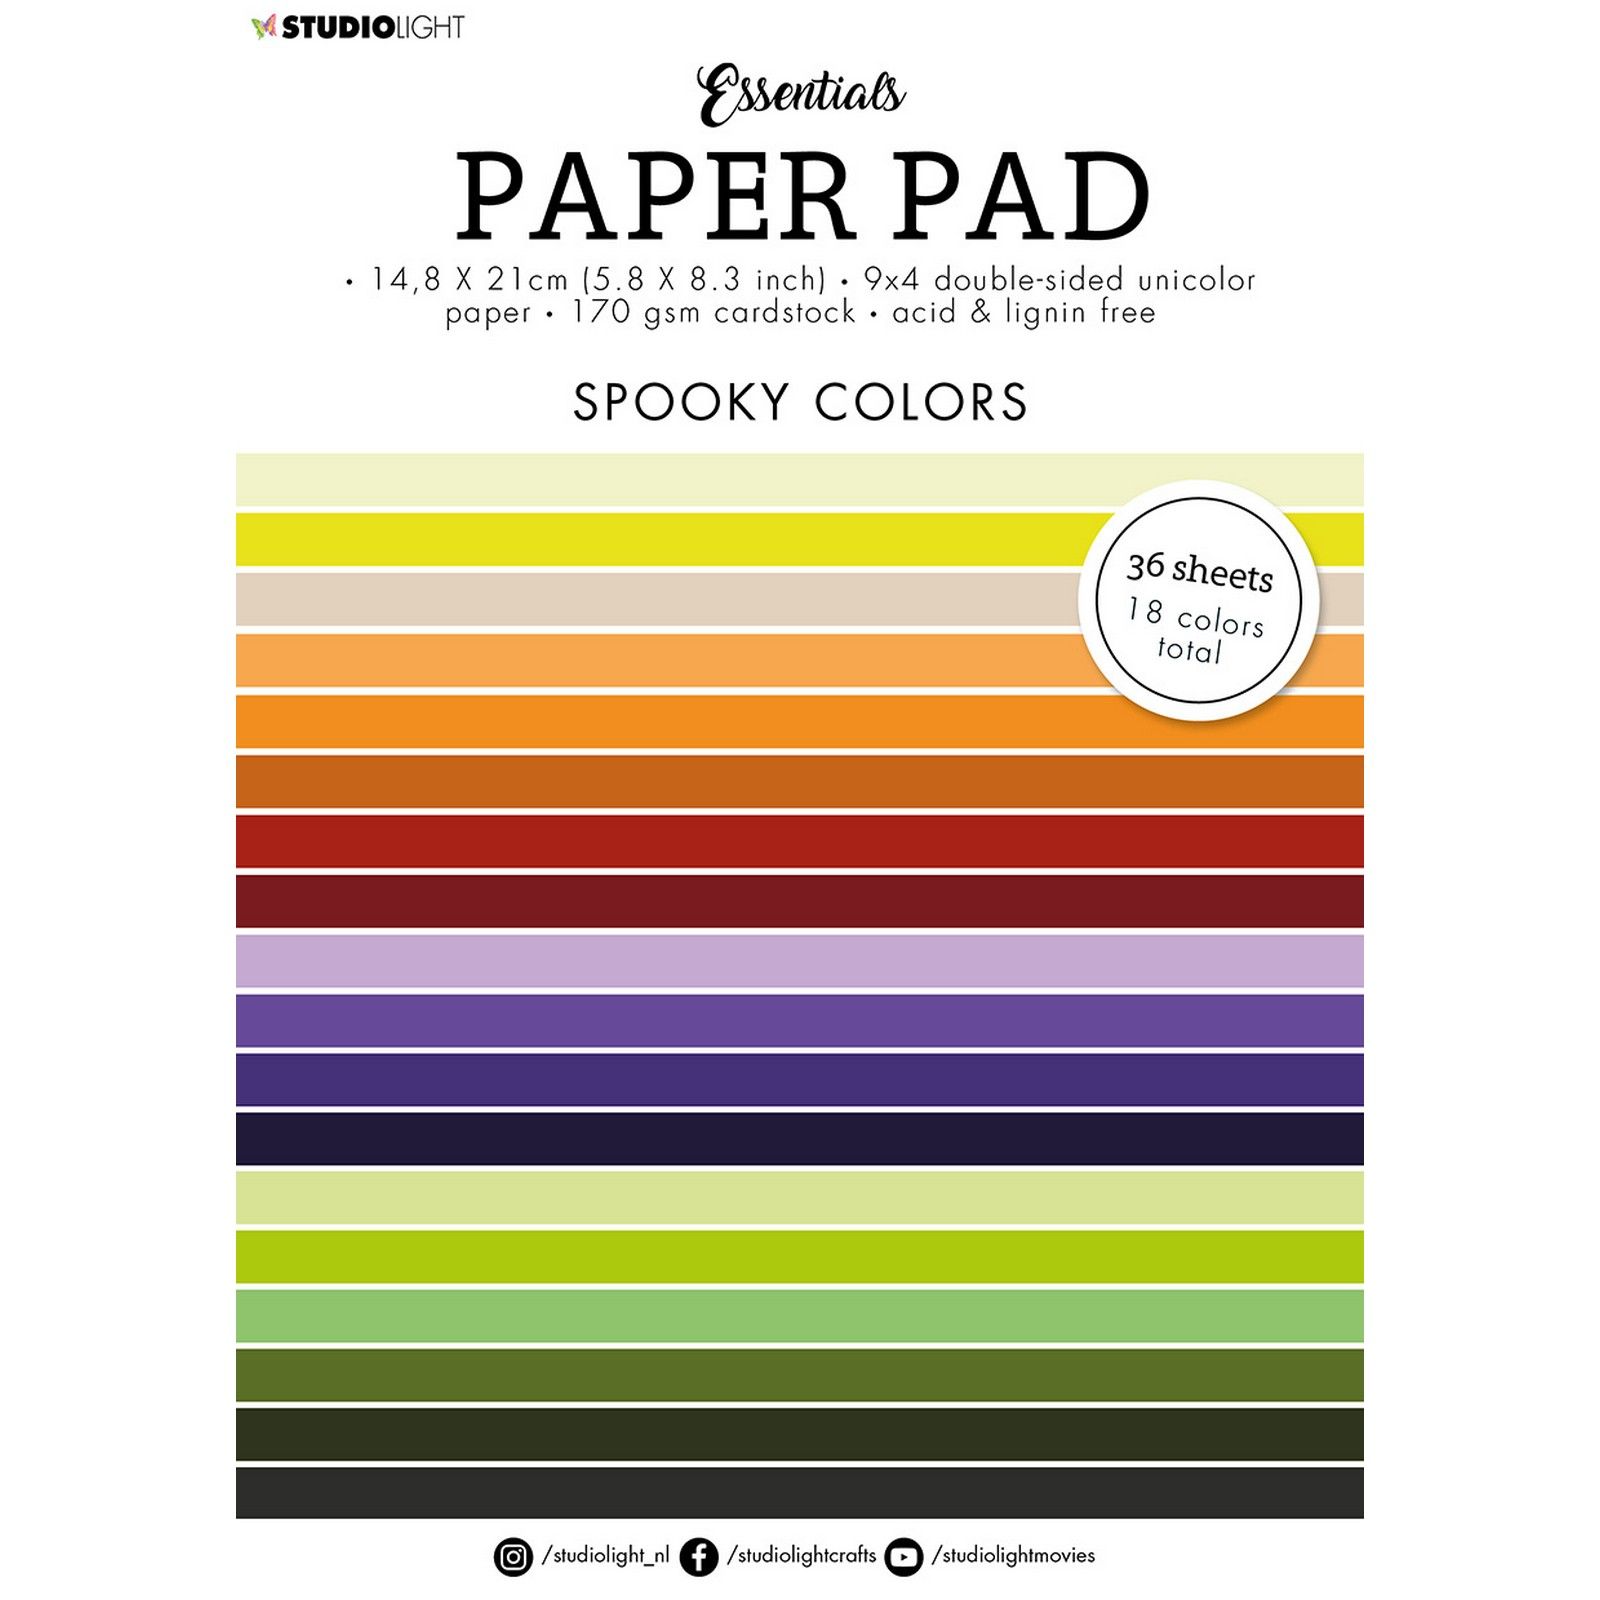 Studio Light • Essentials Paper Pad Double sided Unicolor Spooky Colors